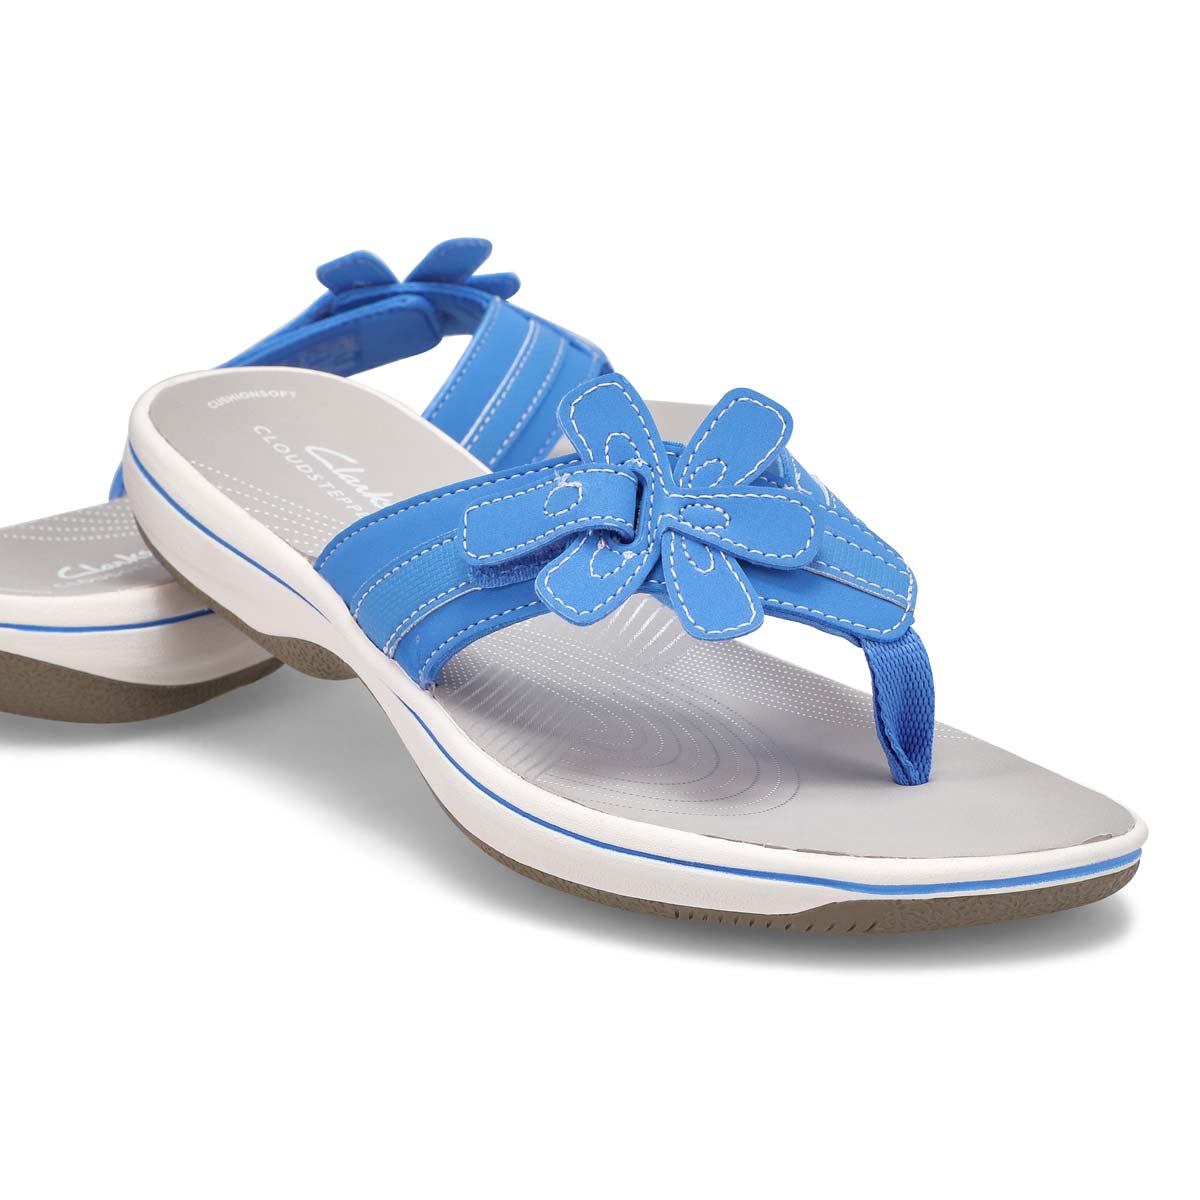 Women's Brinkley Thong Sandal - Blue